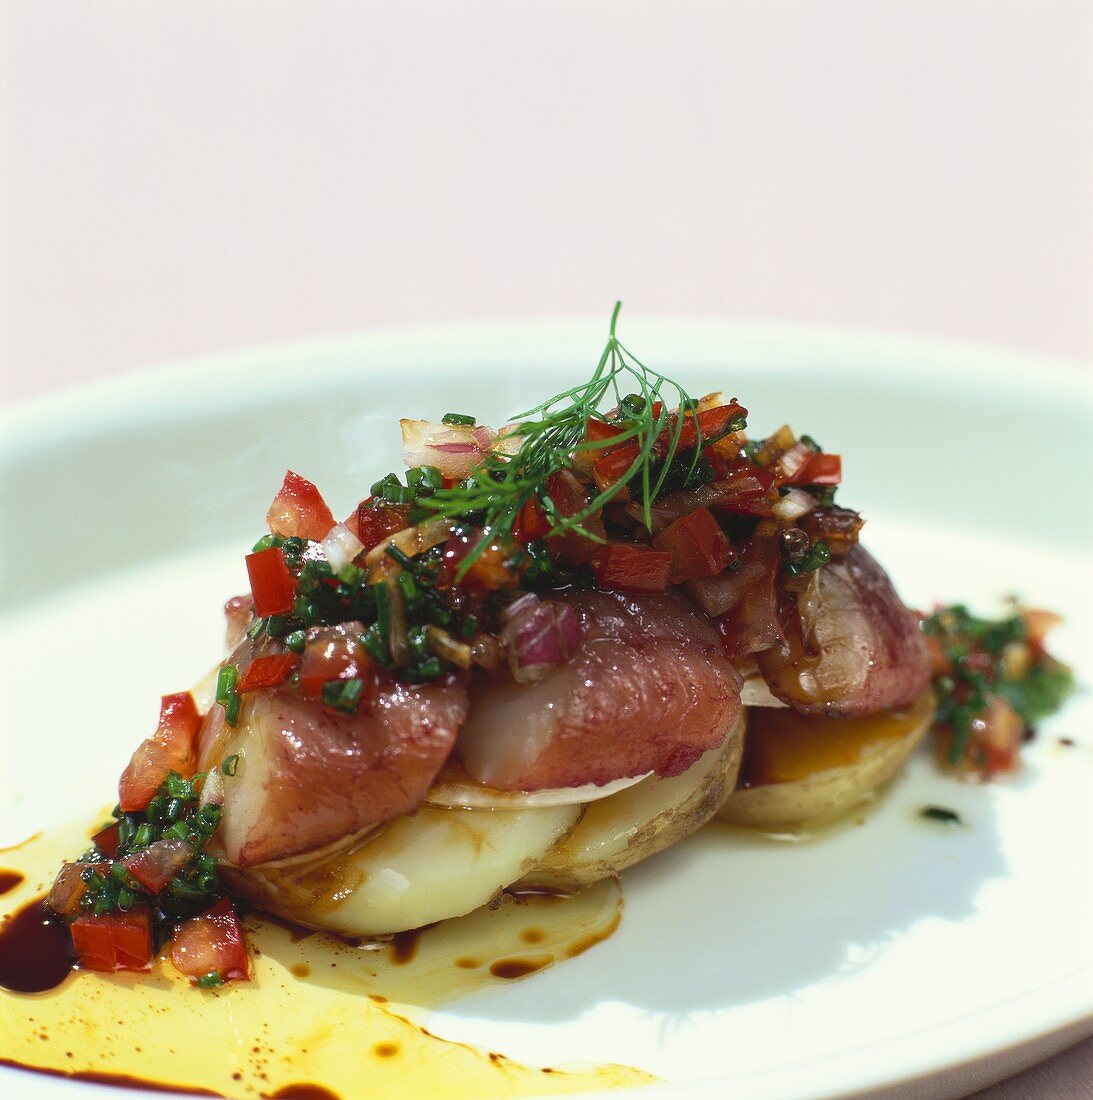 Matjes herrings with tomato salad on potato slices